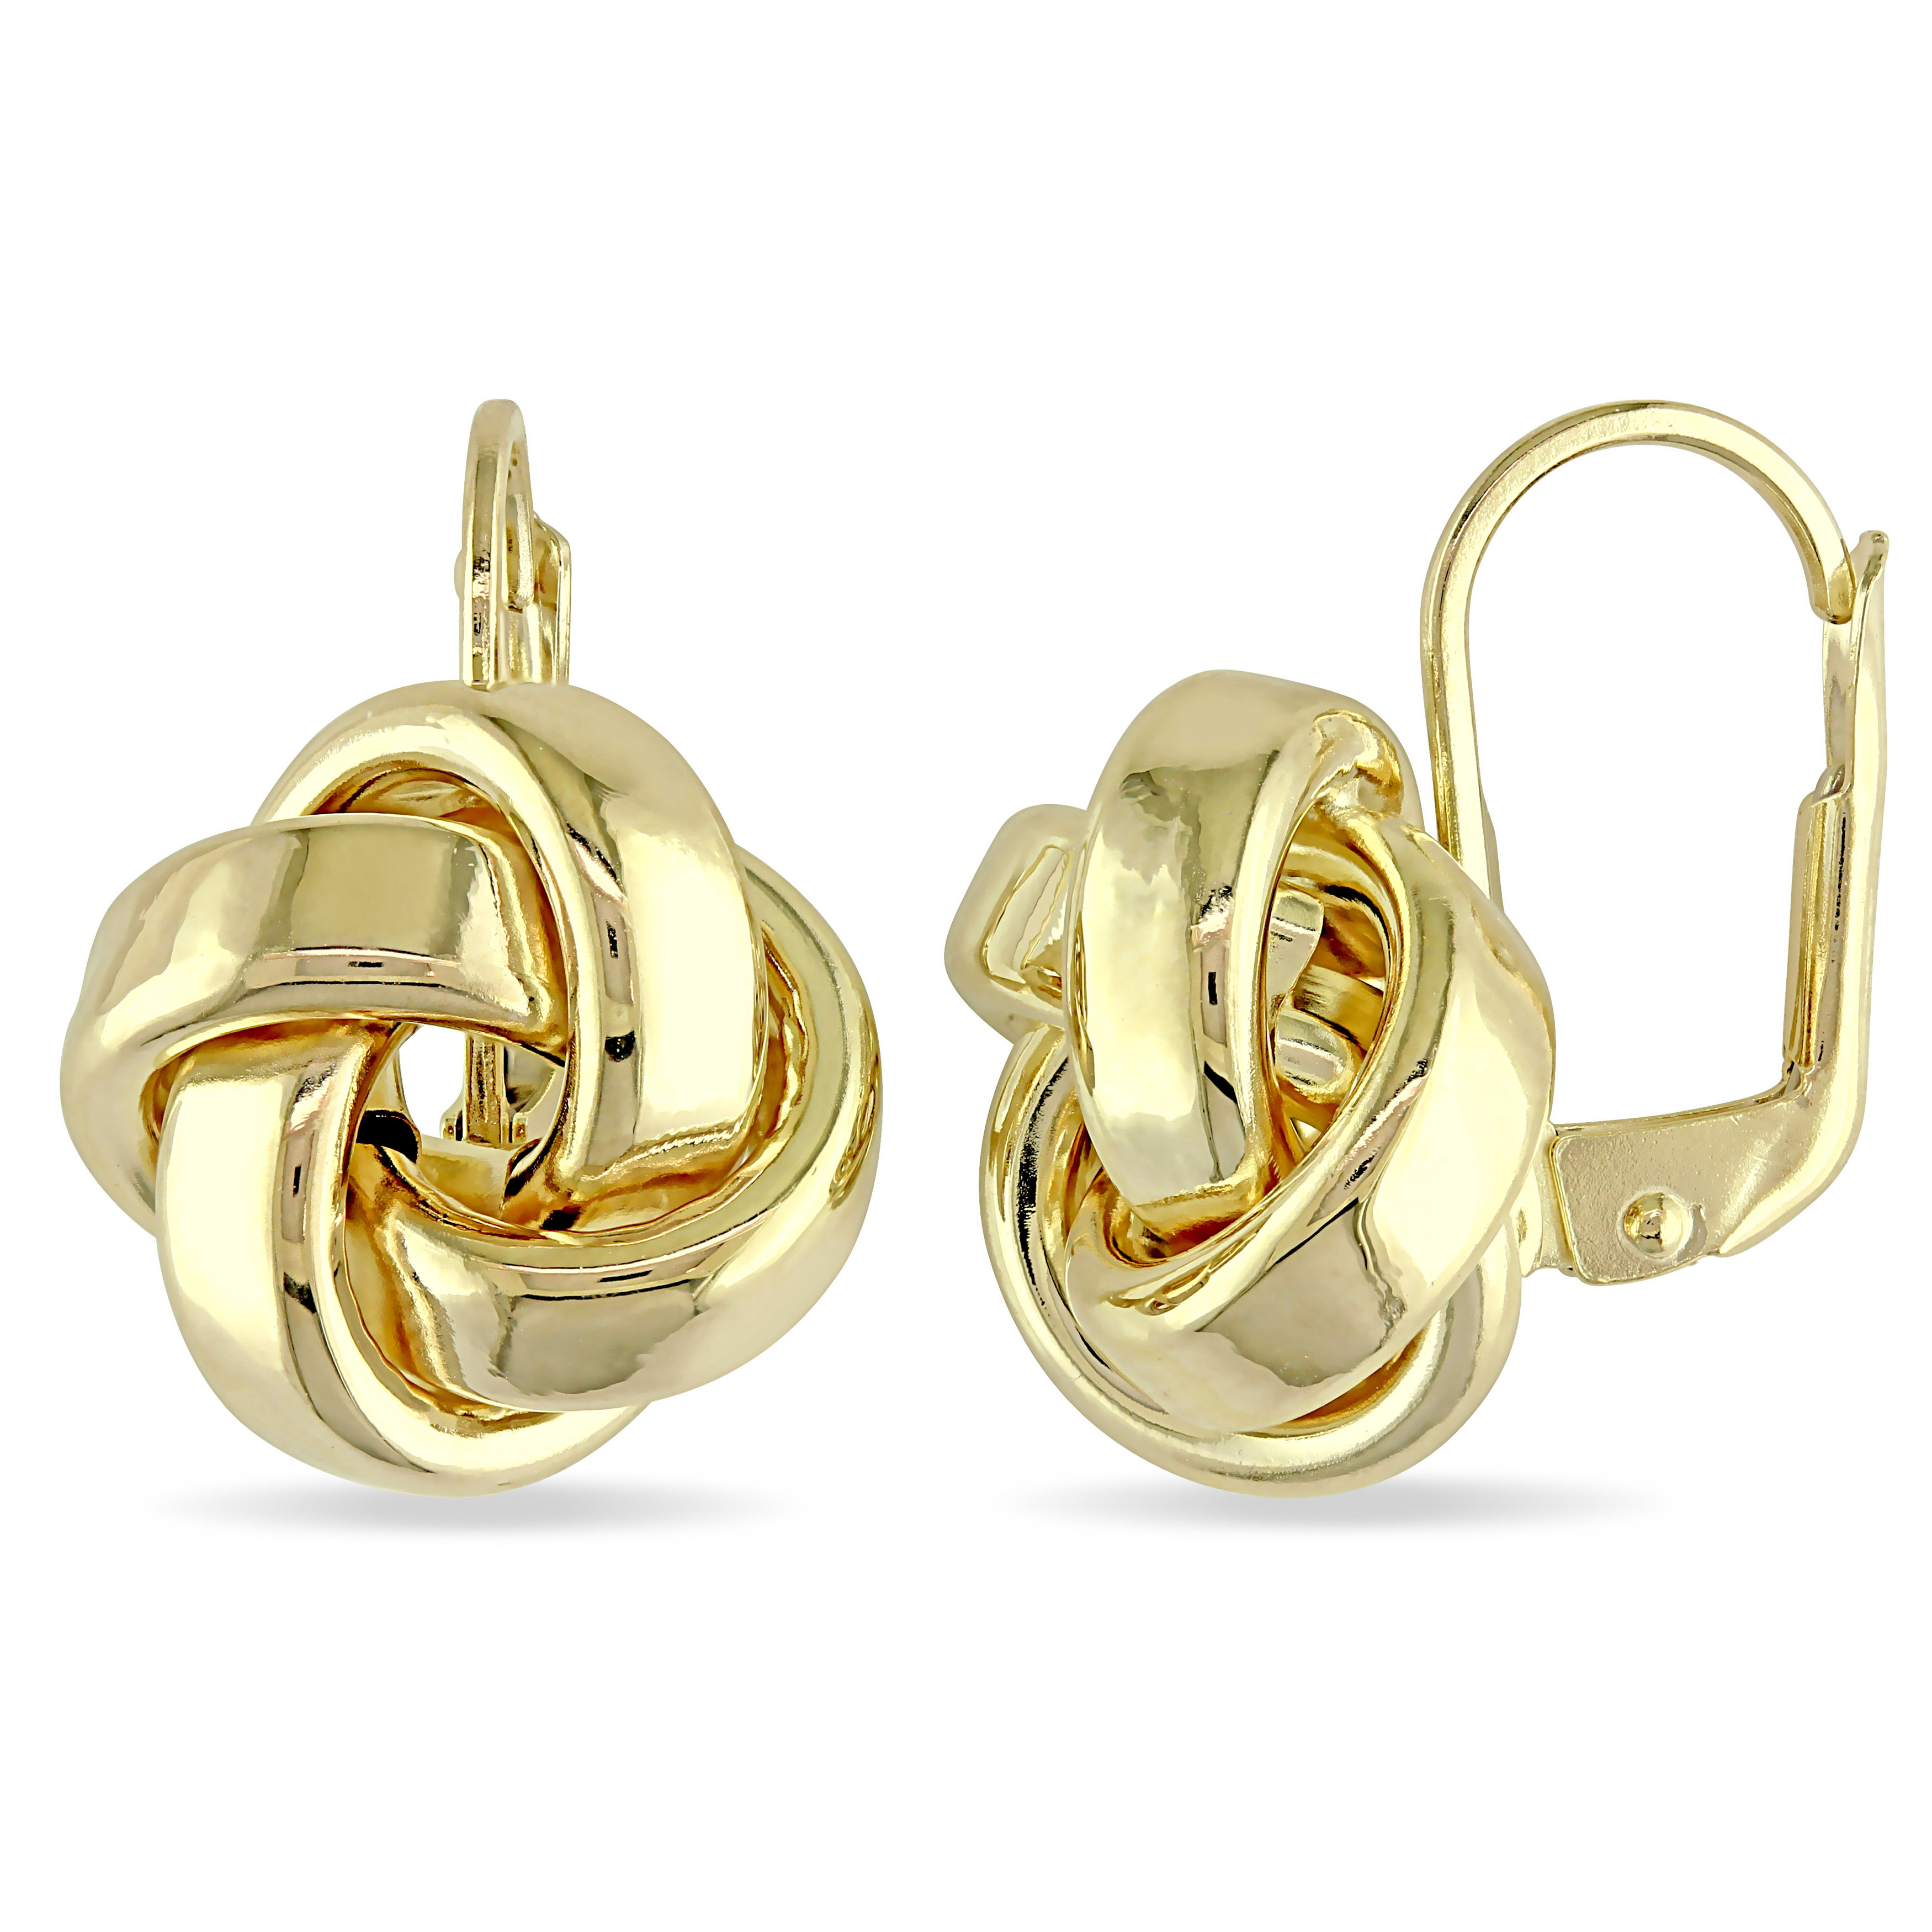 Love Knot Leverback Earrings in 10k Yellow Gold